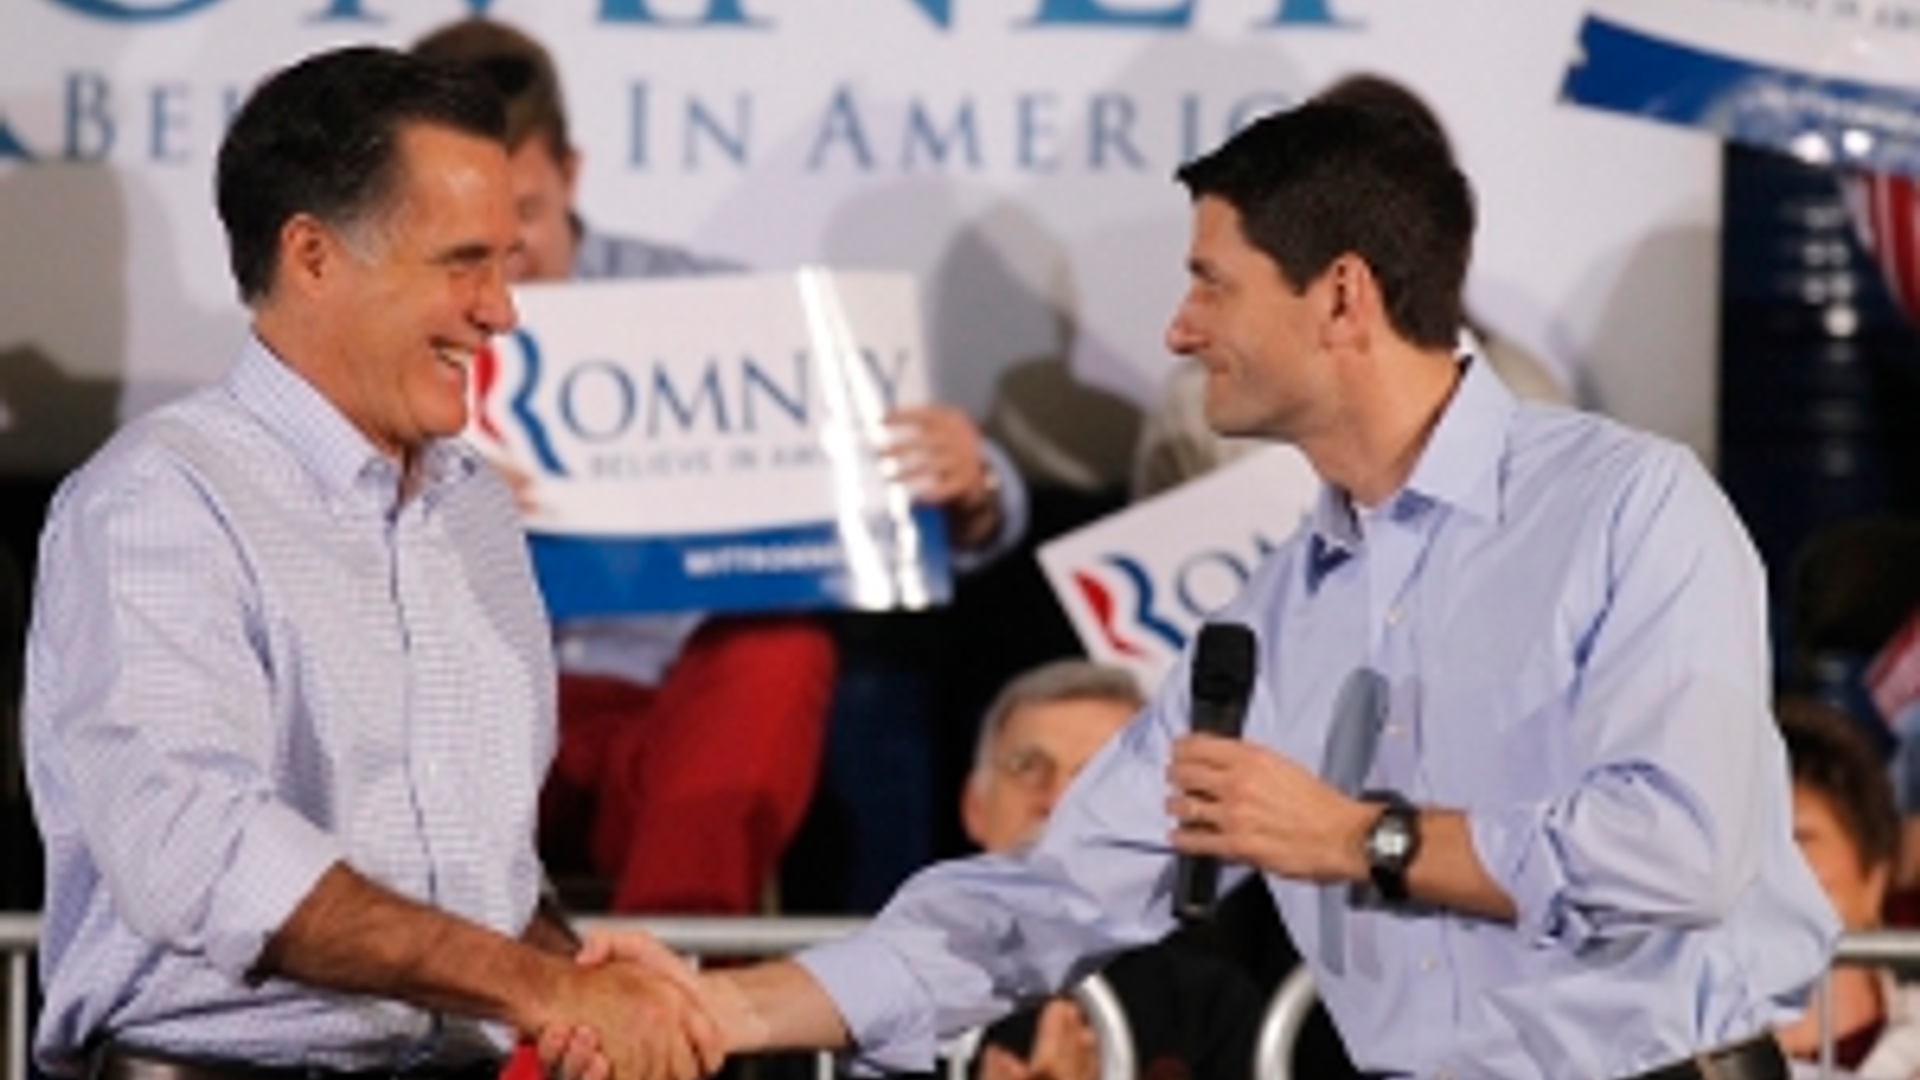 ANP-Romney_Ryan300.jpg